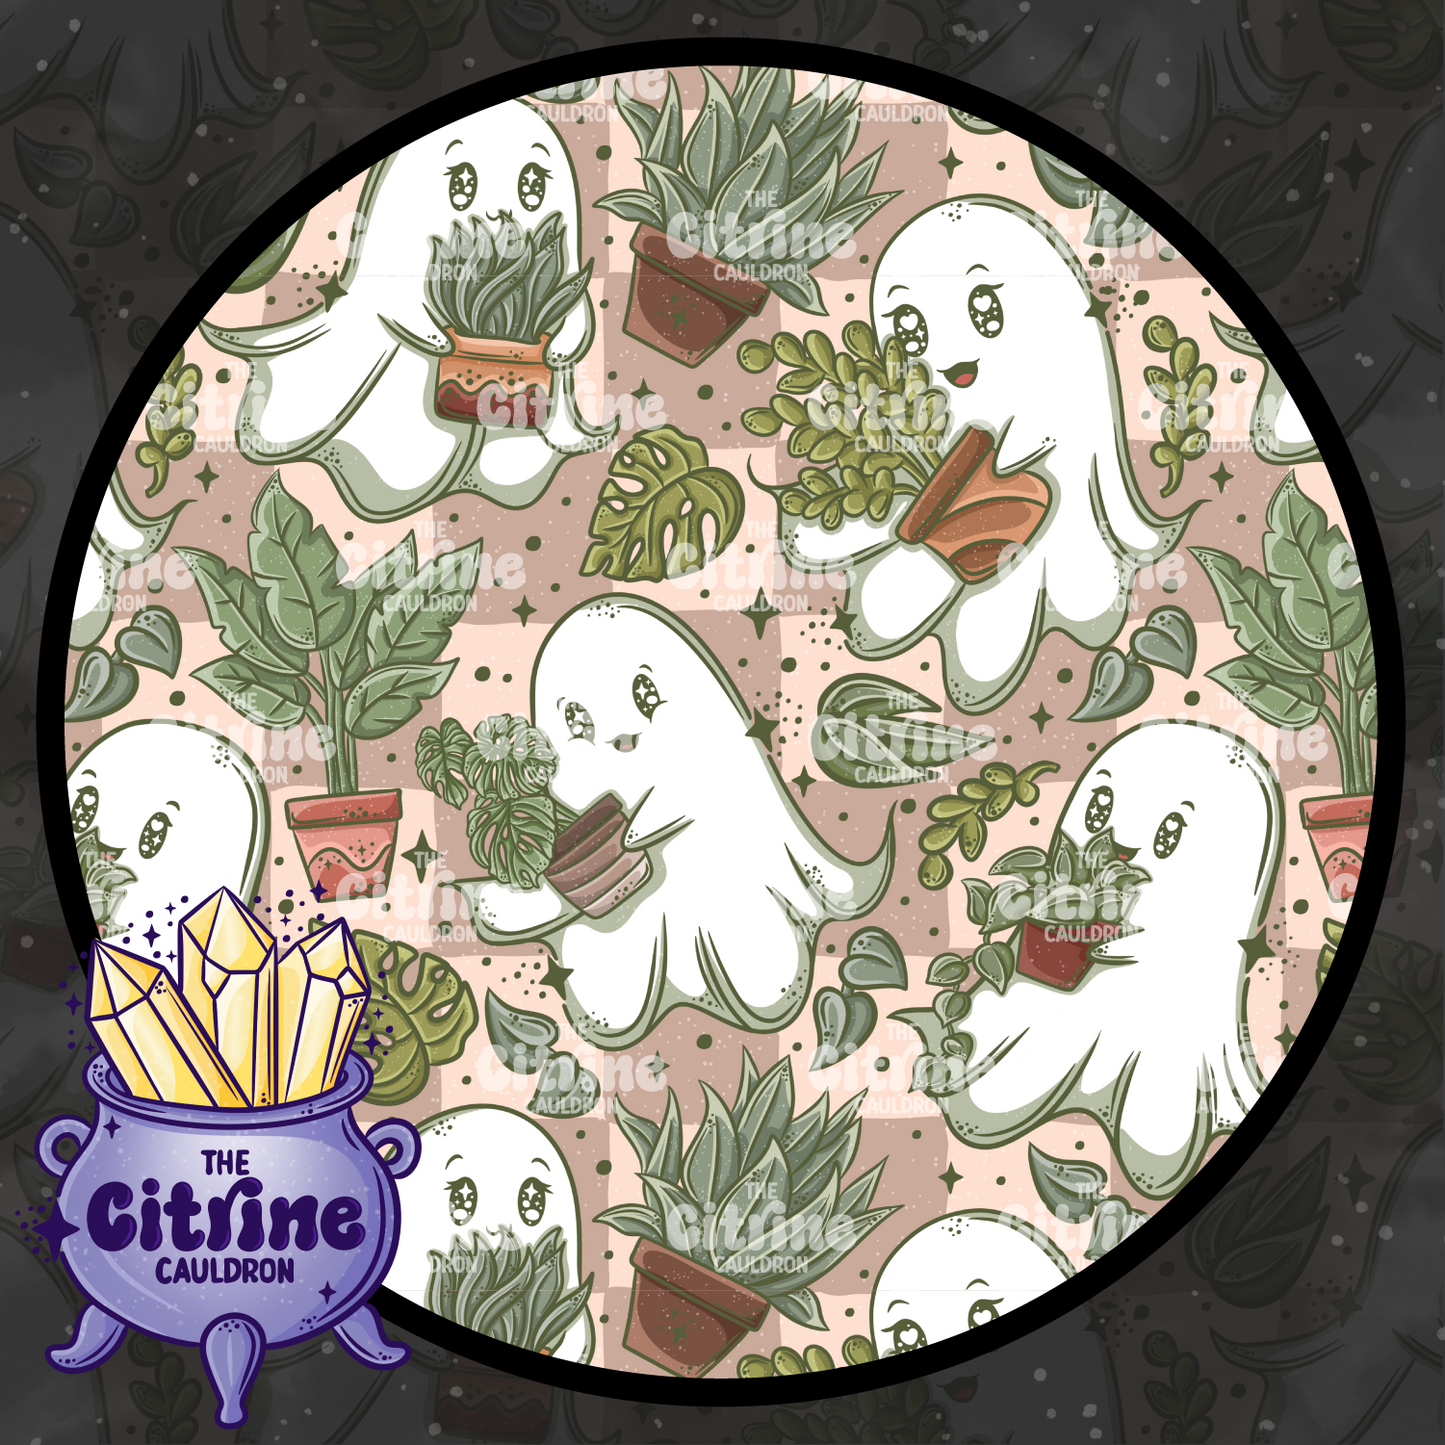 Ghostie Plants - Seamless